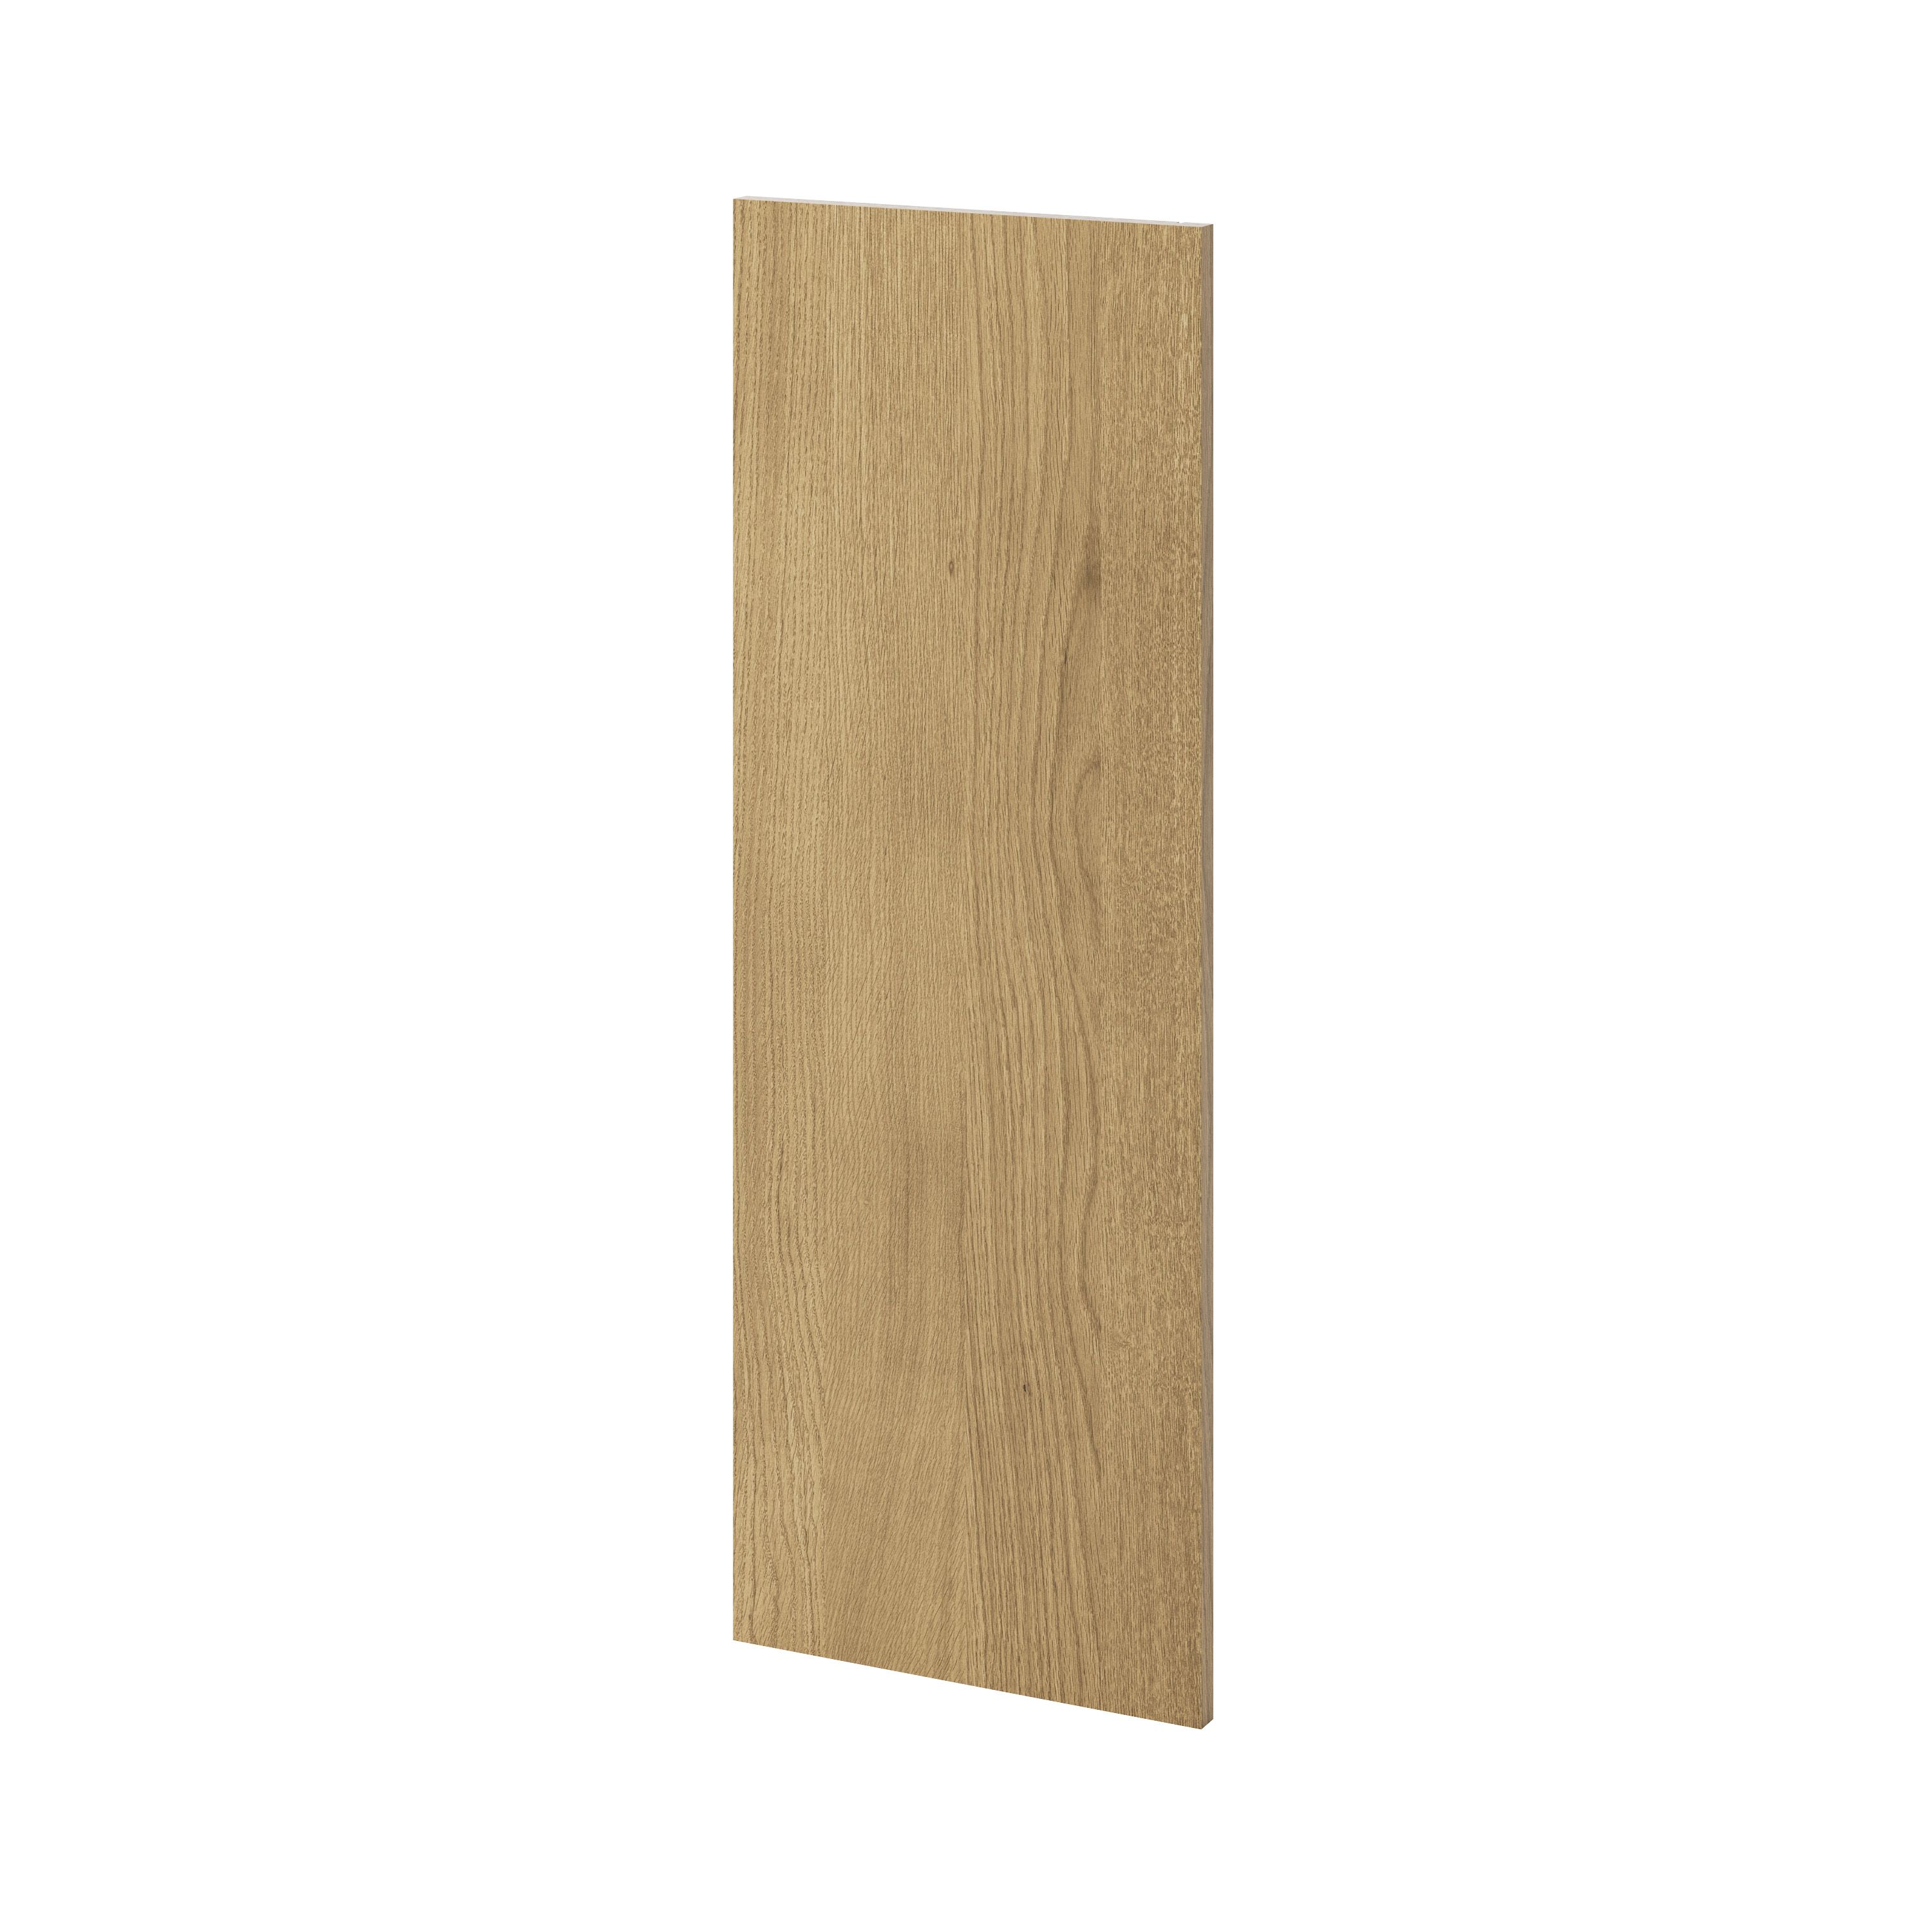 GoodHome Verbena Natural oak shaker Tall End panel (H)900mm (W)320mm